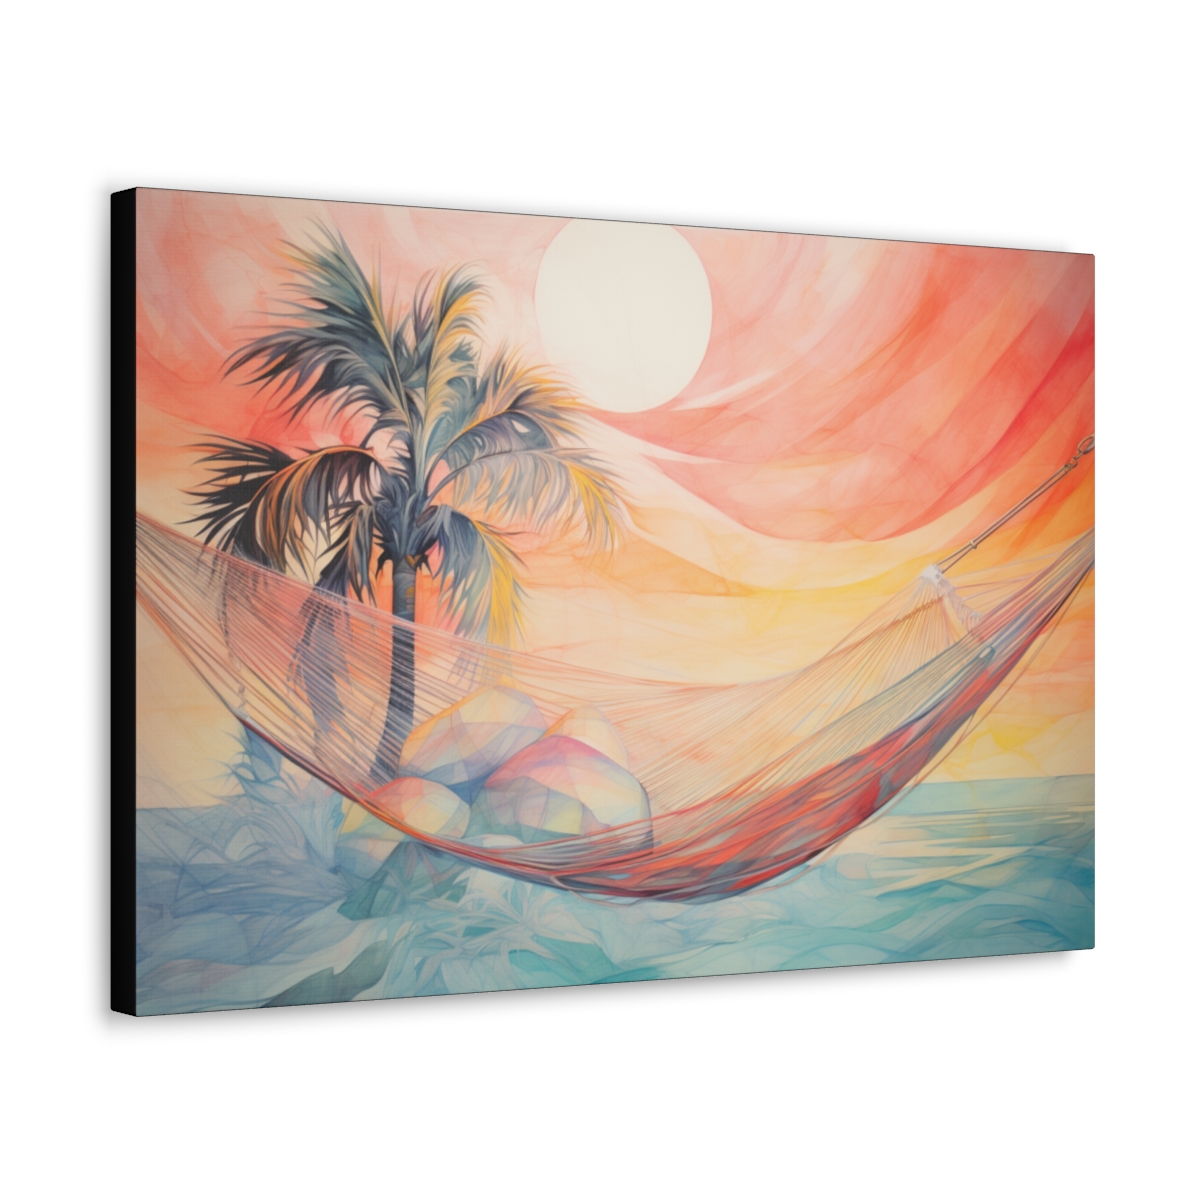 Tropical Art Canvas Print: Ethereal Escape